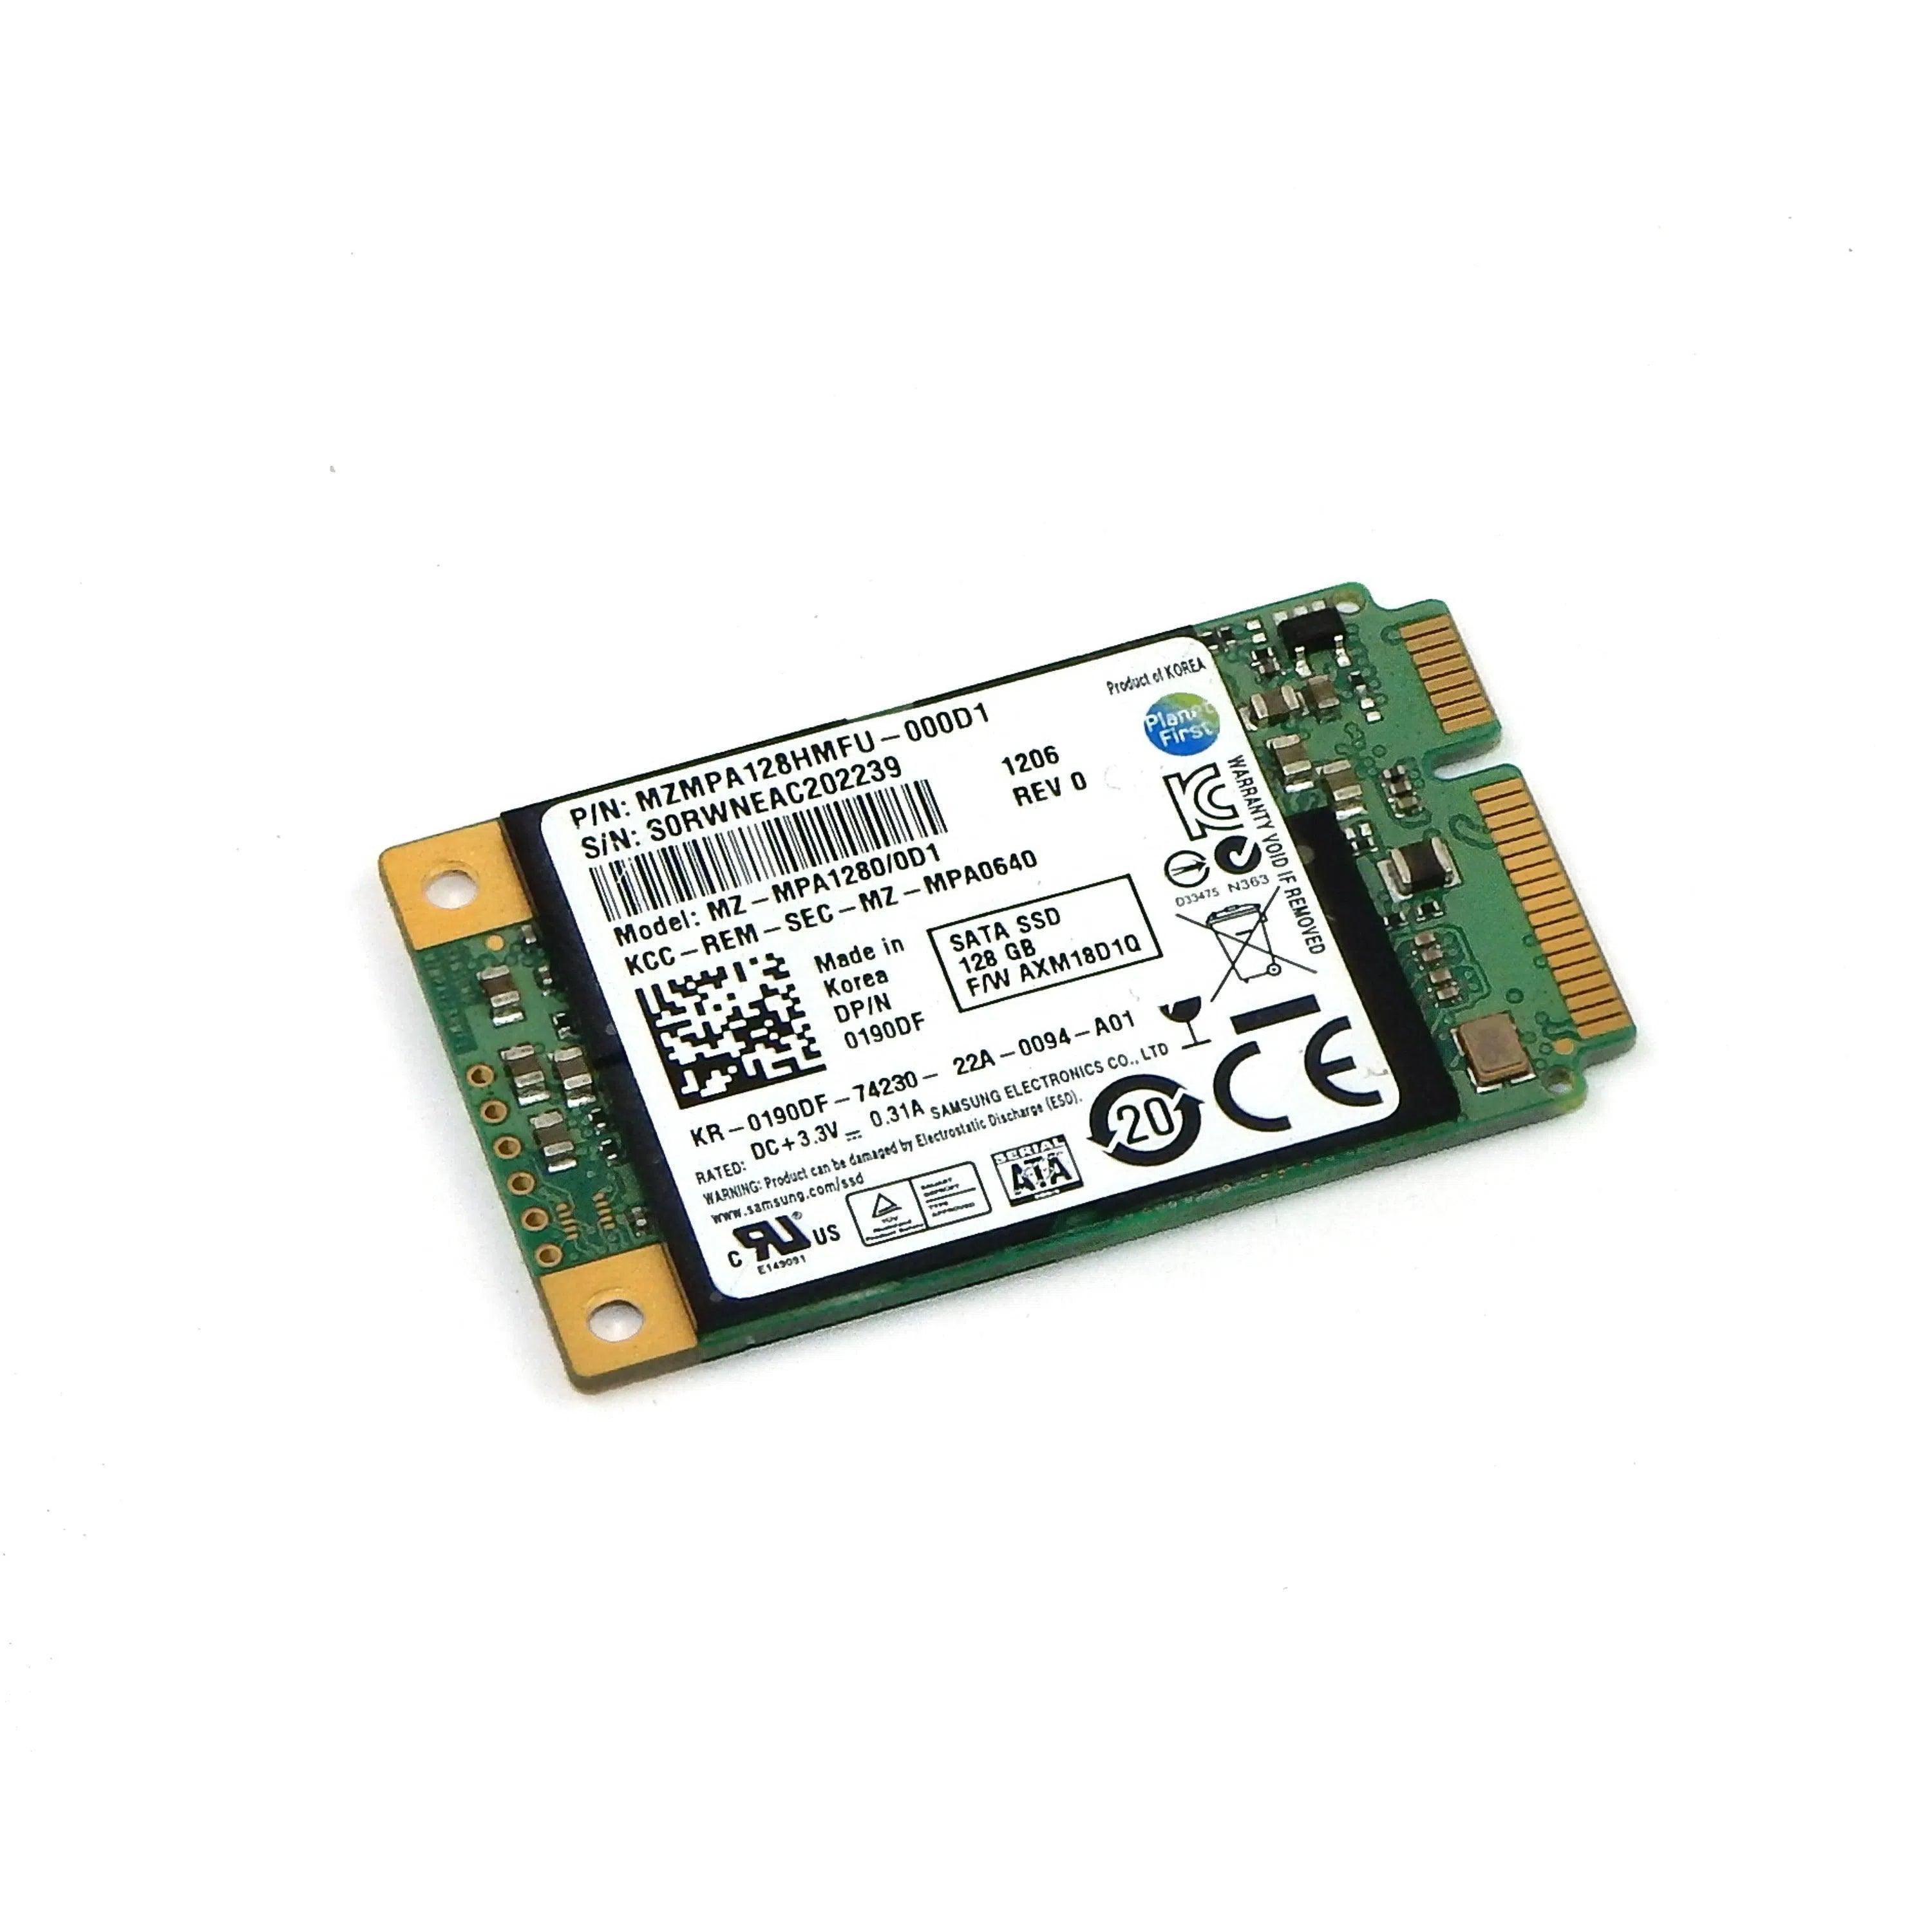 Samsung 128gb mSata SSD drive - TIO